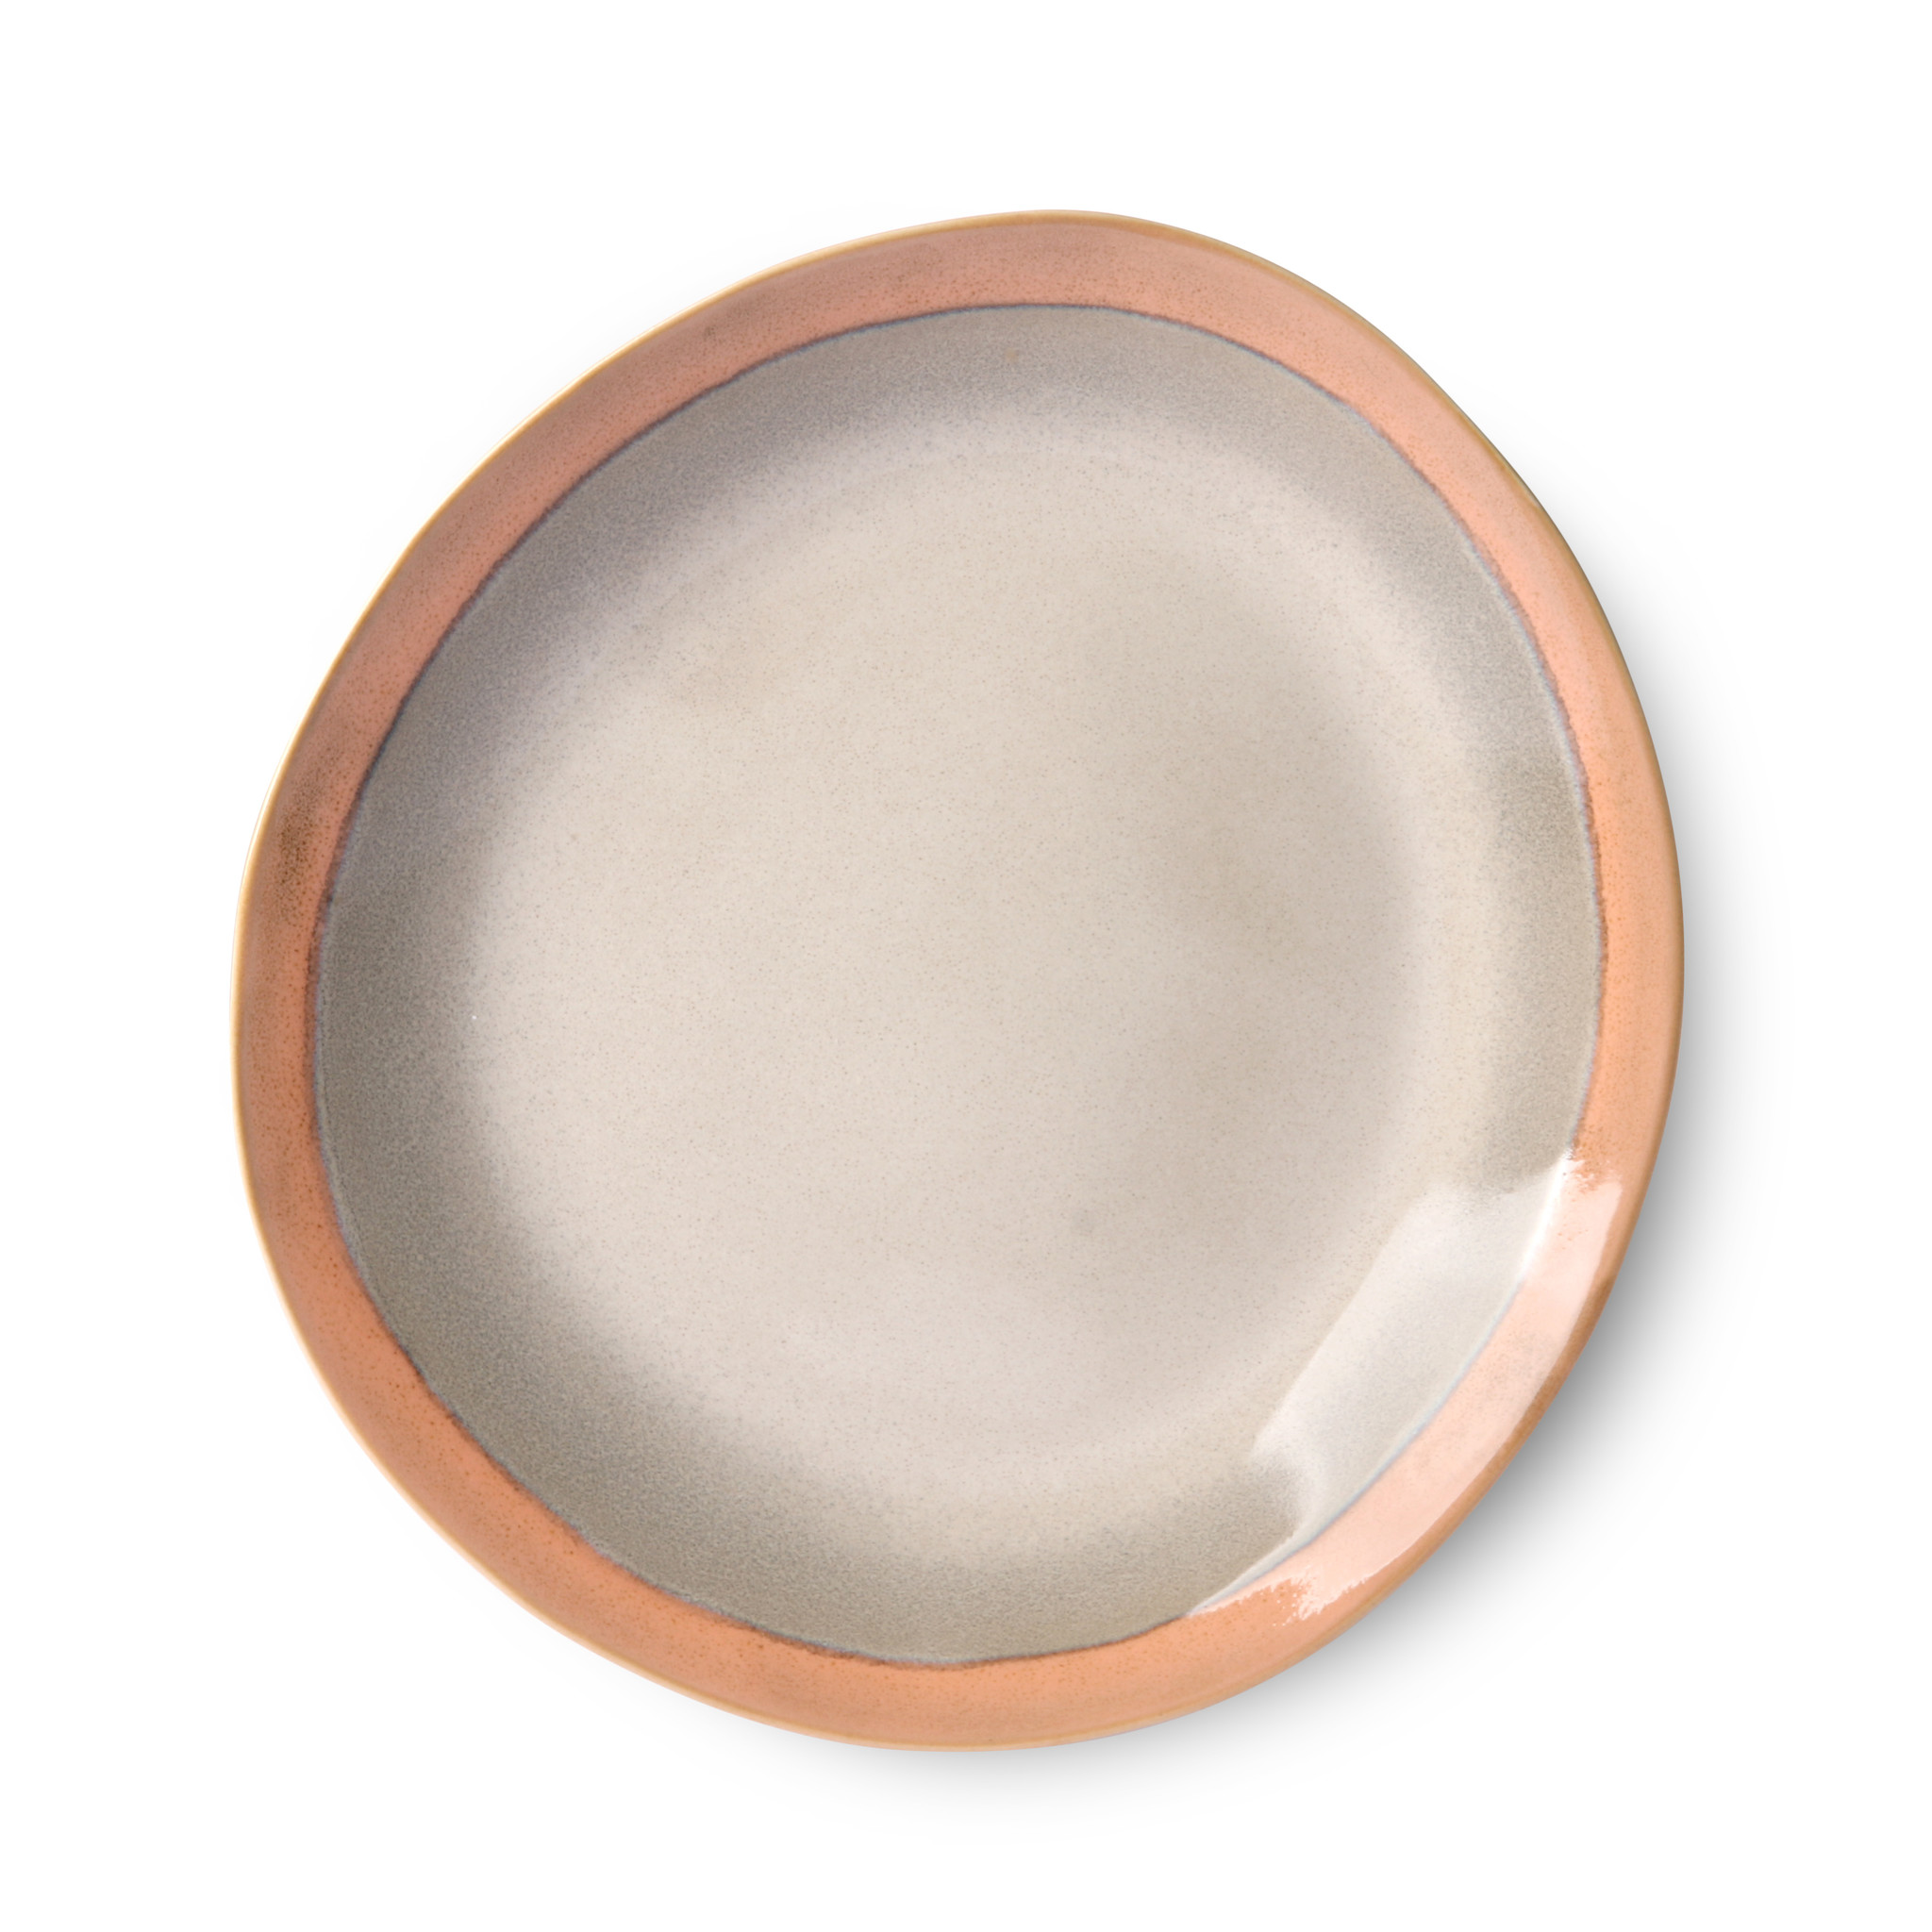 Ontmoedigen orgaan Rennen HKliving bord 70's ceramic "earth" Ø22cm - Nieuwe collectie 2020 -  orangehaus